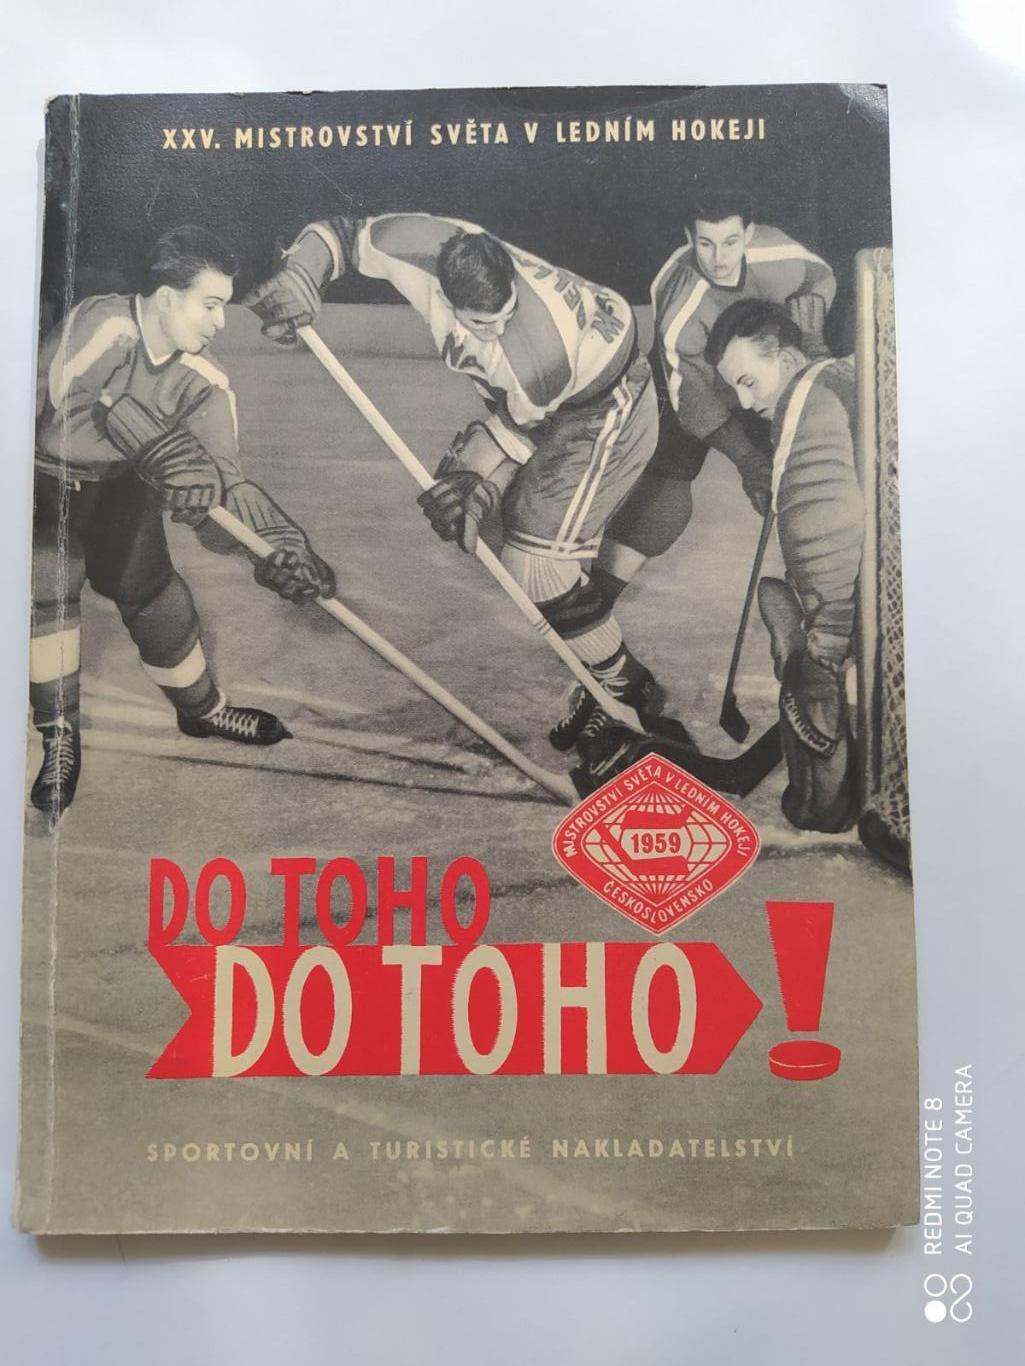 XXV.MISTROVSTVI SVETA V LEDNIM HOKEJI Чемпионат мира по хоккею Чехословакия 1959